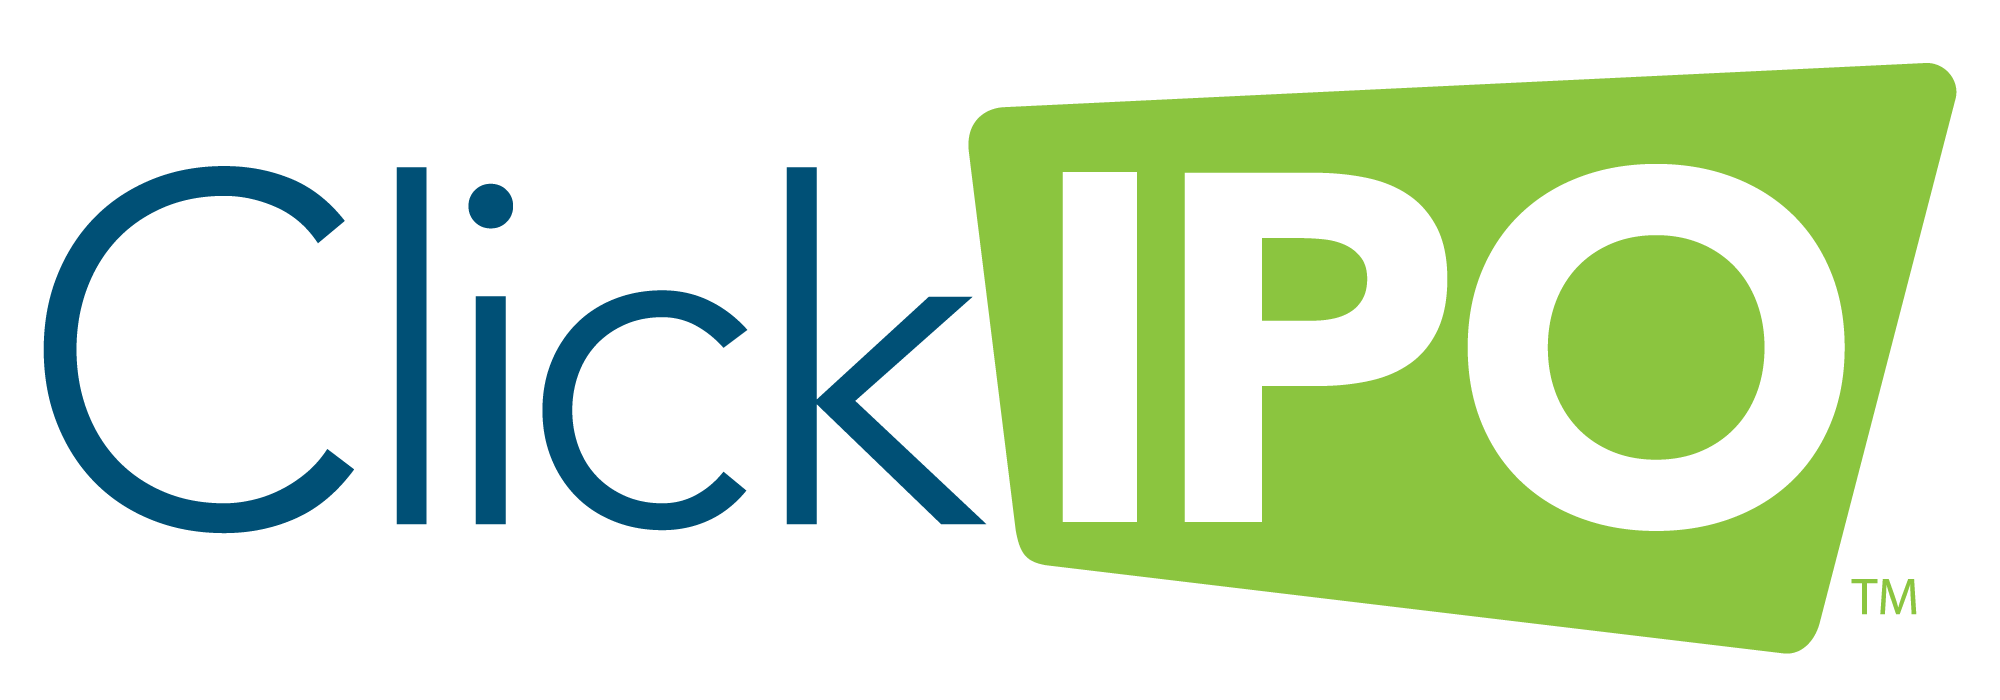 Click IPO logo